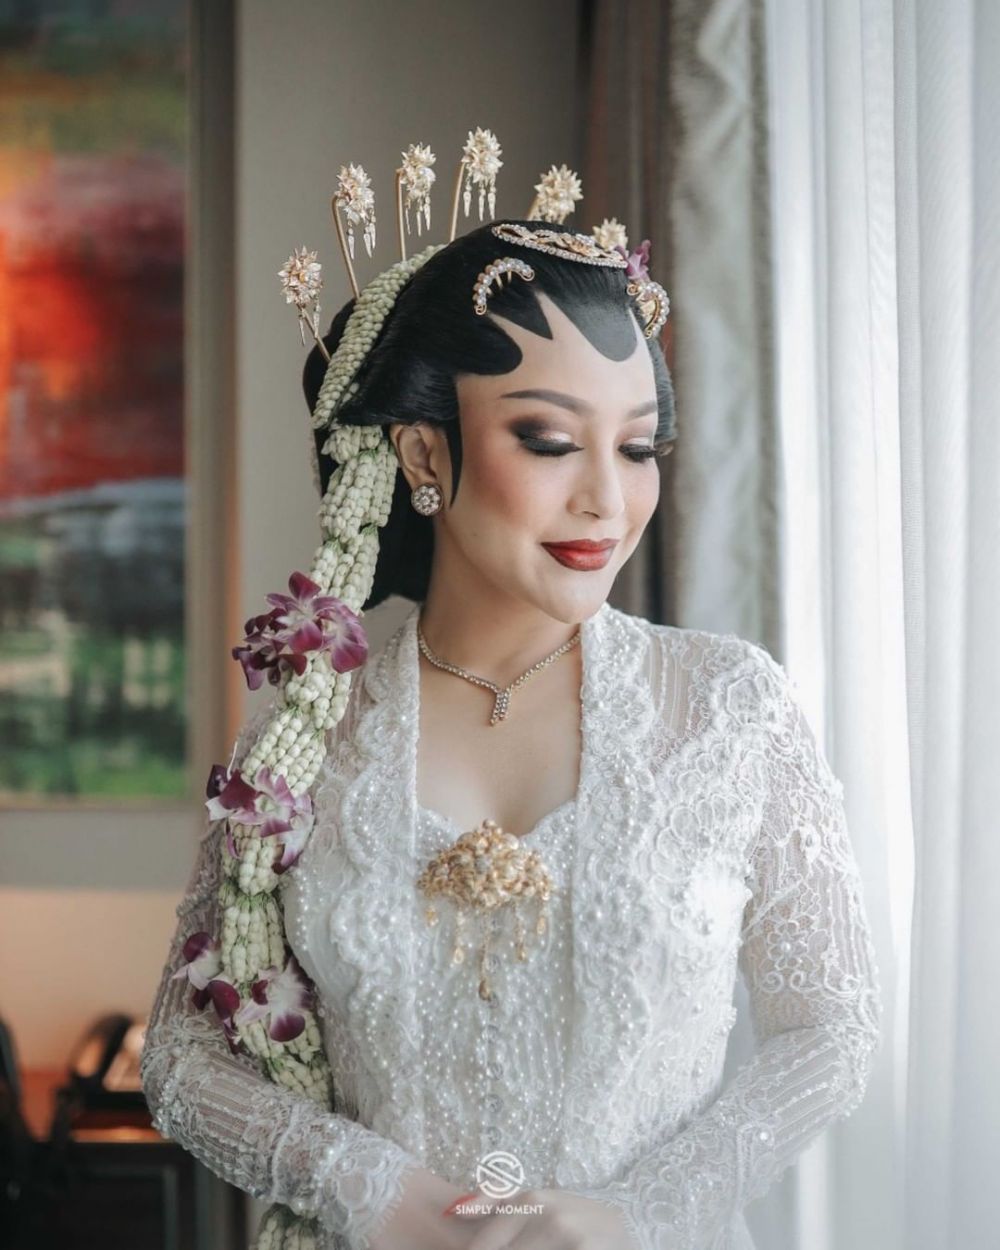 10 Momen pernikahan Nabilla Gomes dan Muhammad Reza, usung adat Jawa